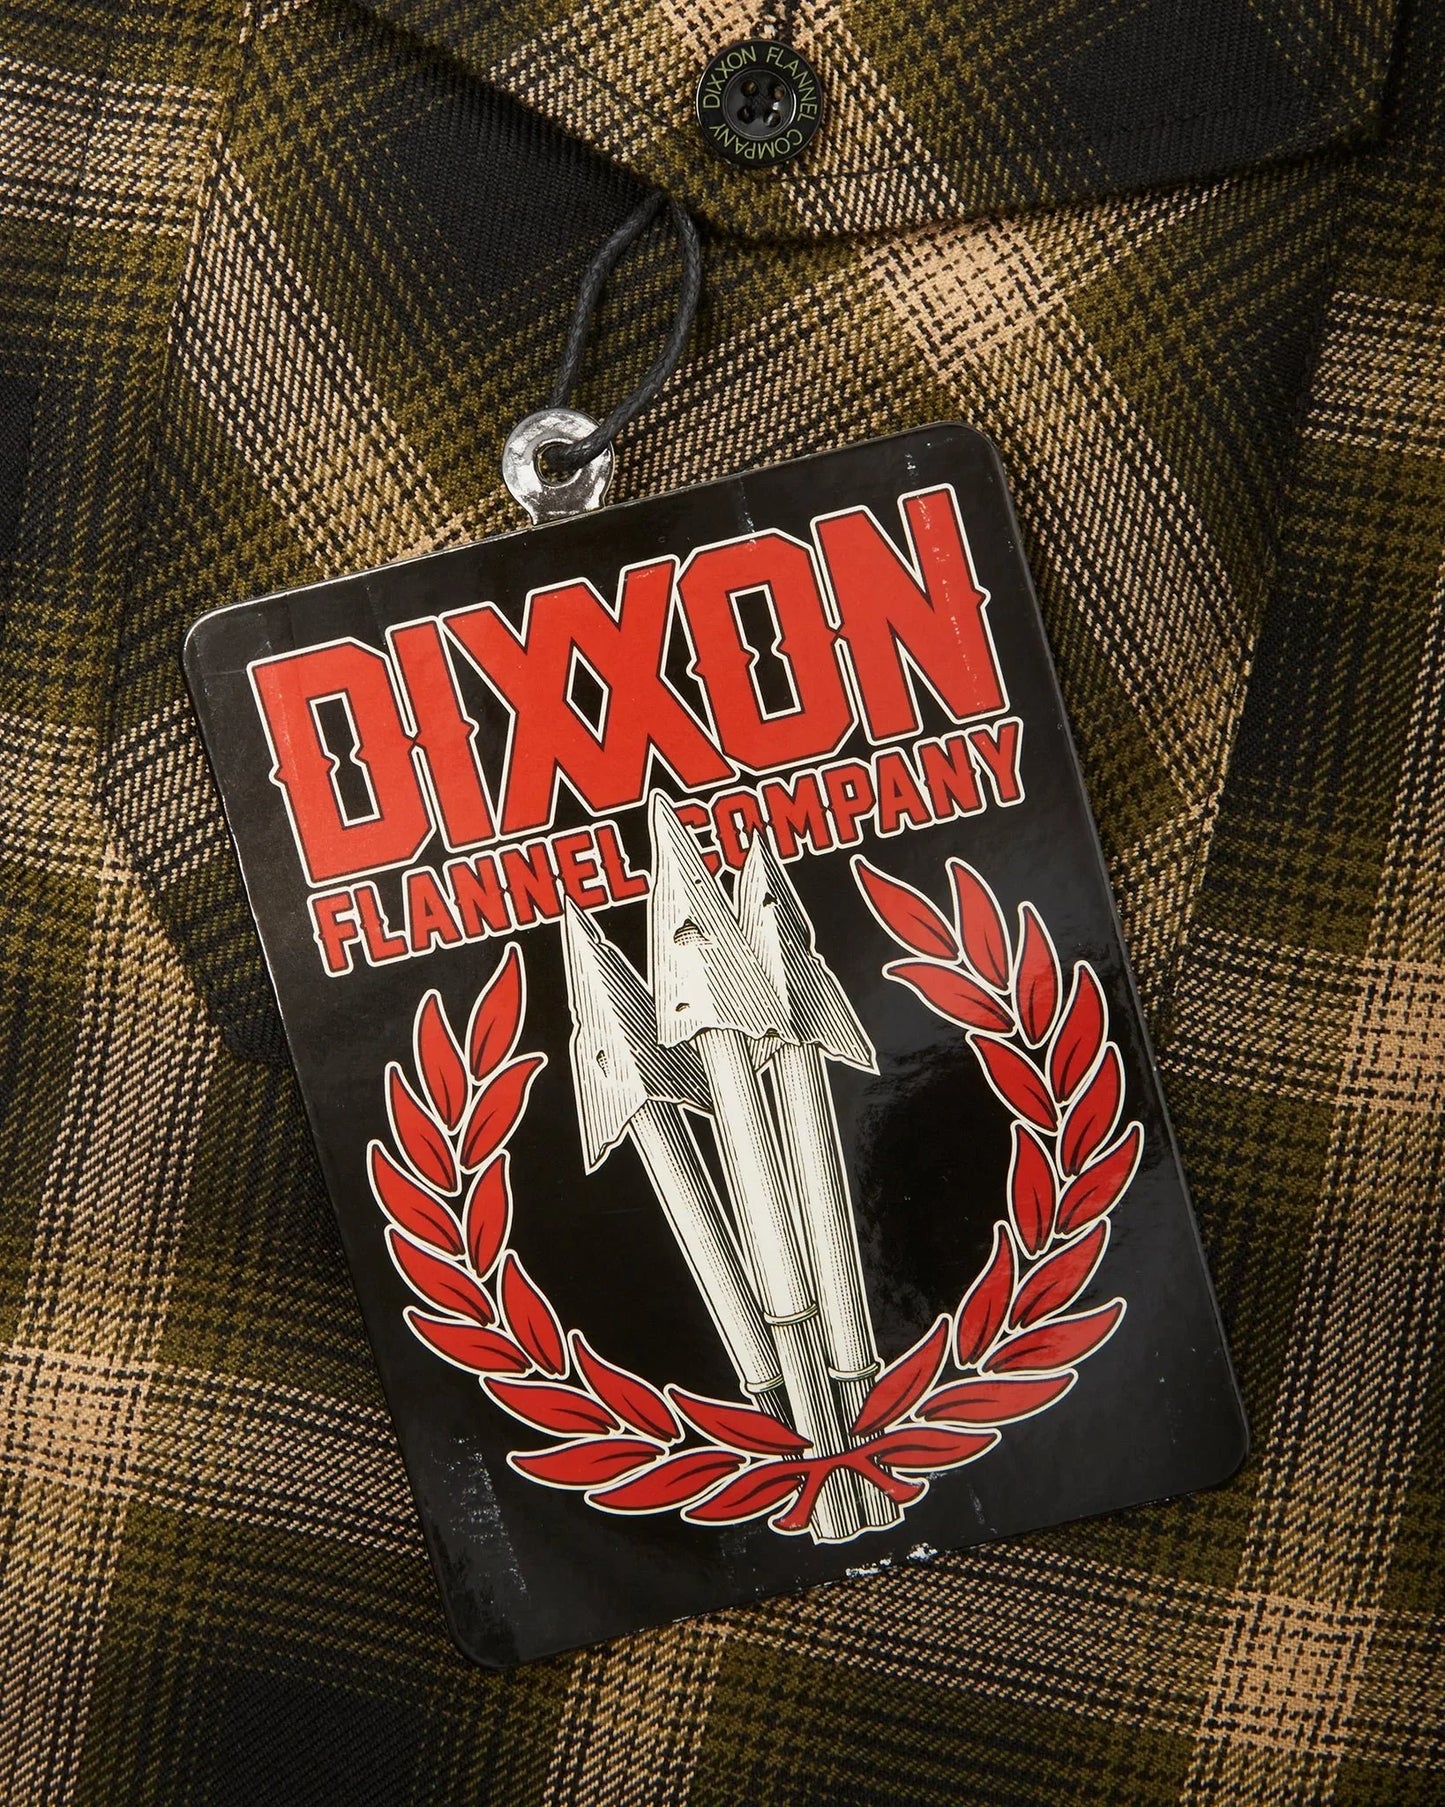 Longbow Dixxon Flannel Jacket - Harley Davidson of Quantico